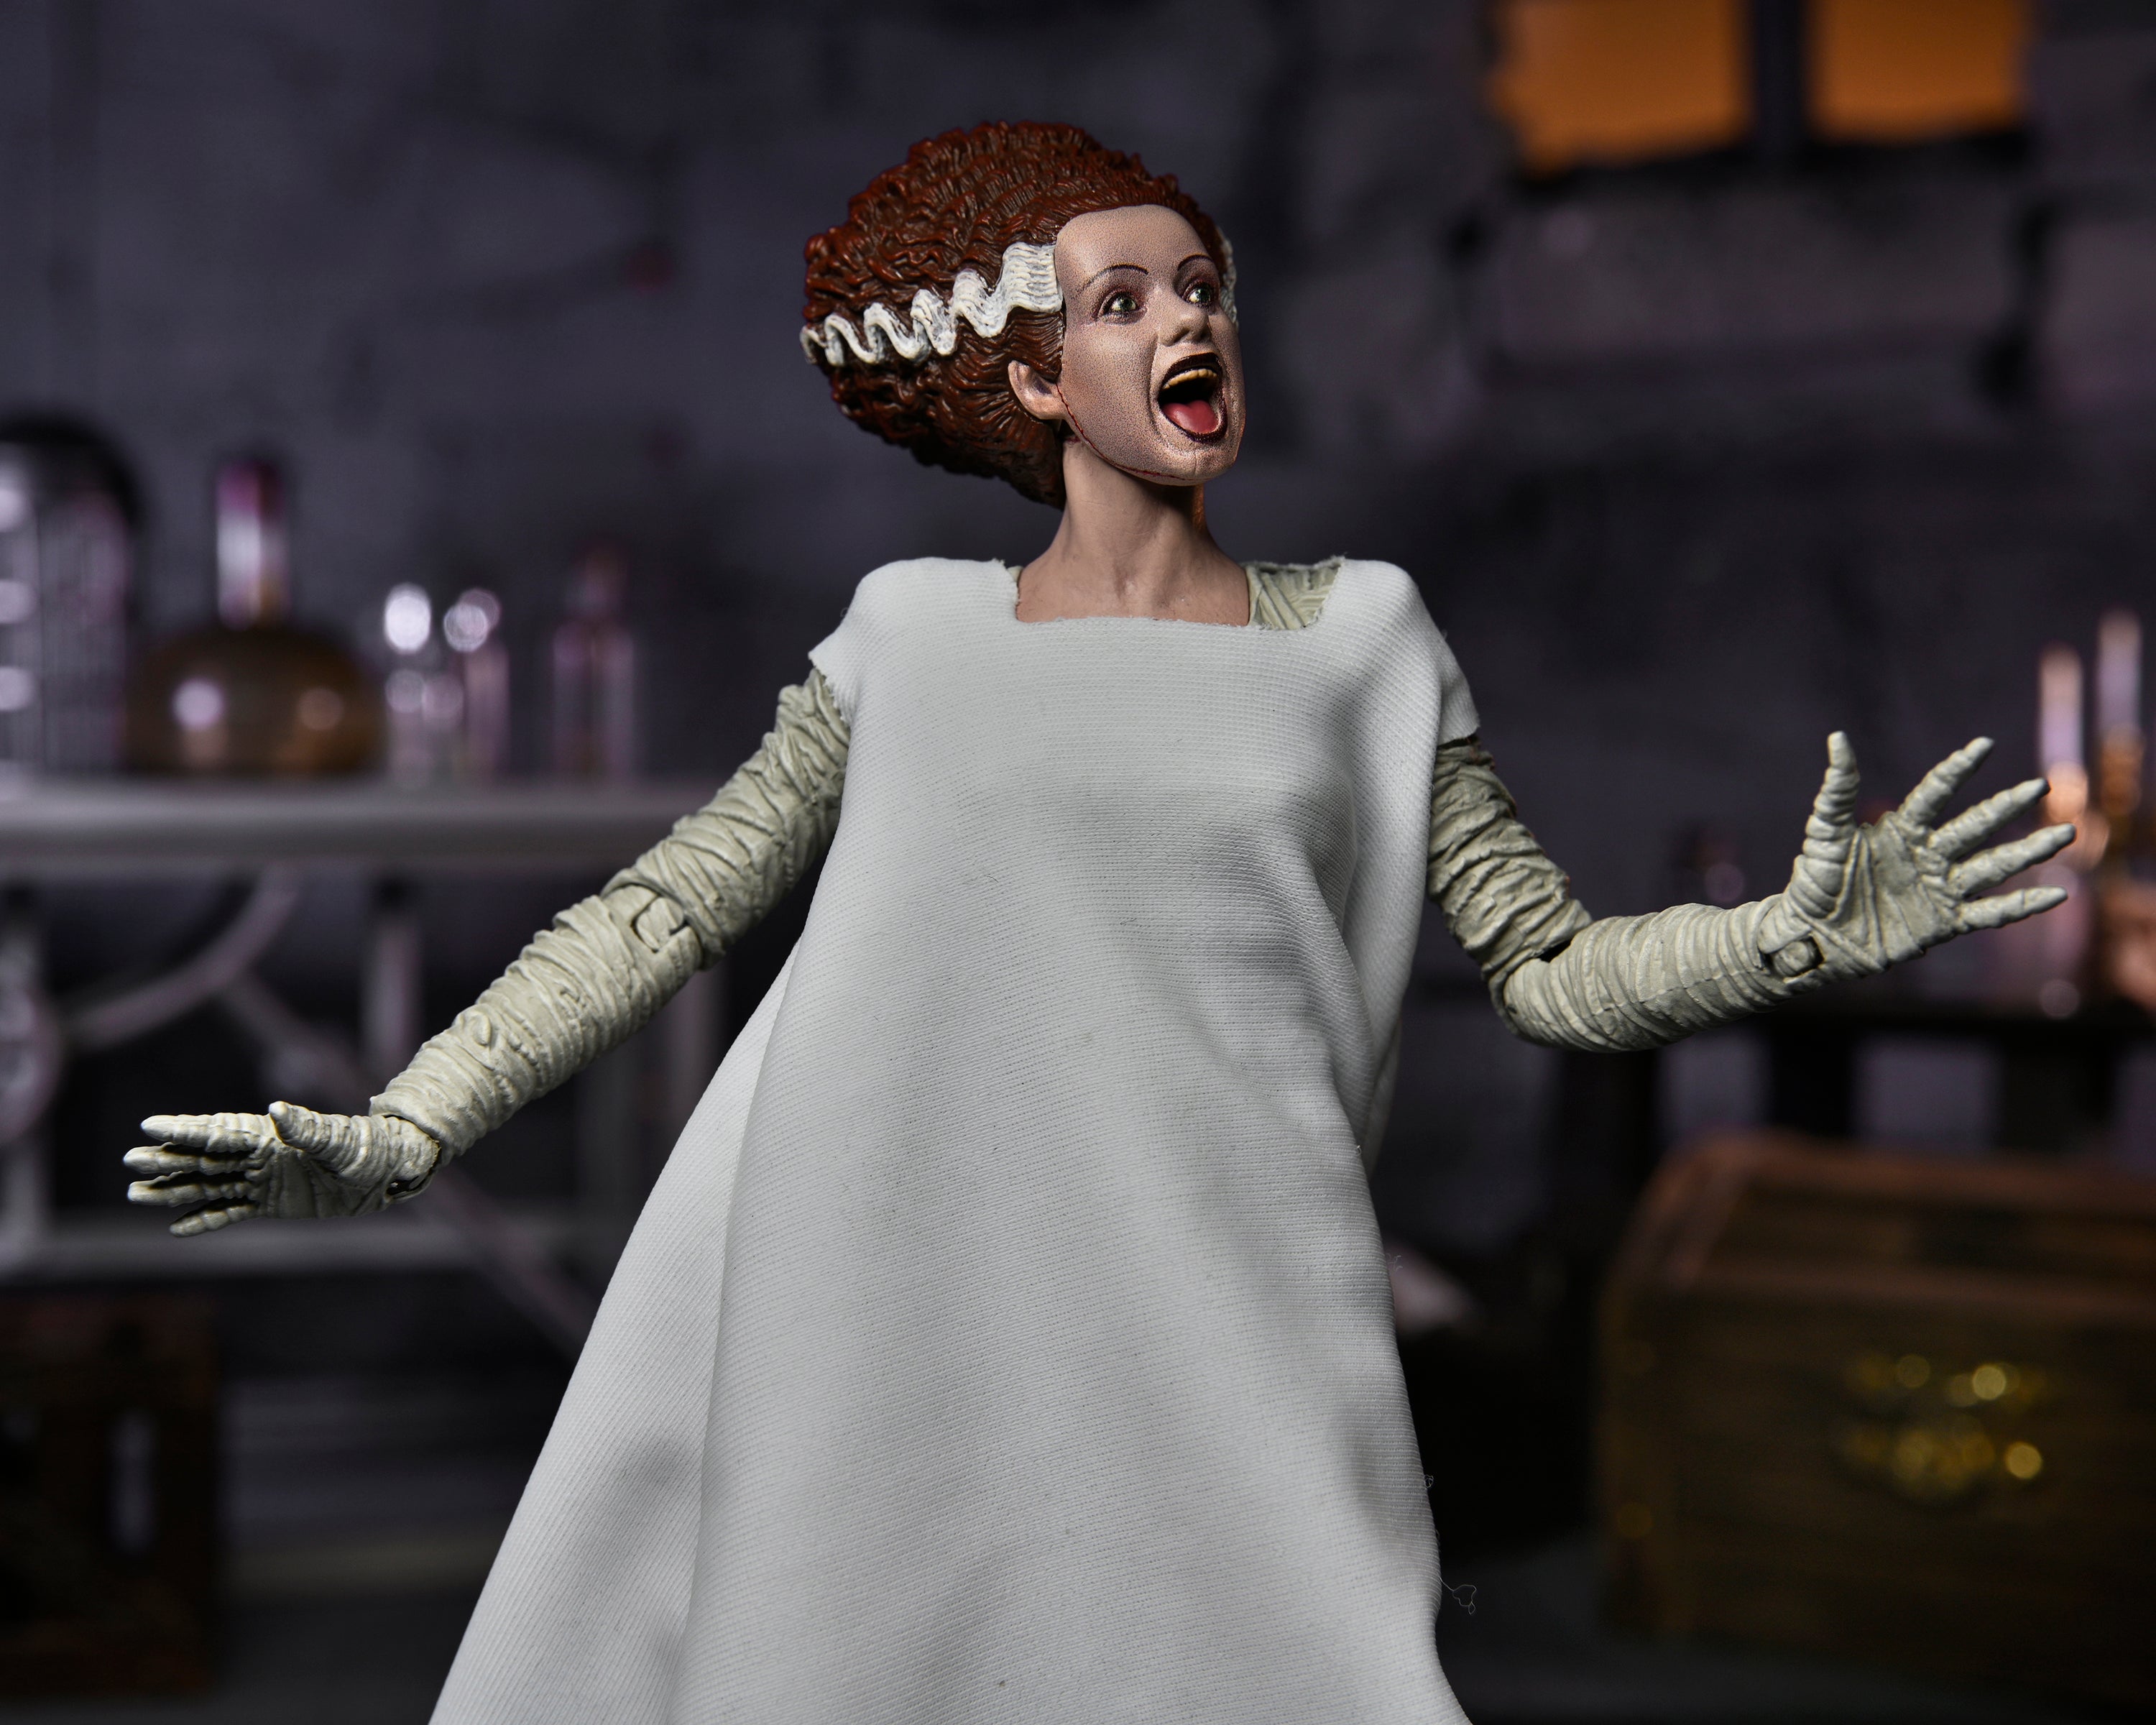 Neca Figura de Accion Ultimate: Universal Monster - La Novia De Frankenstein Color 7 Pulgadas